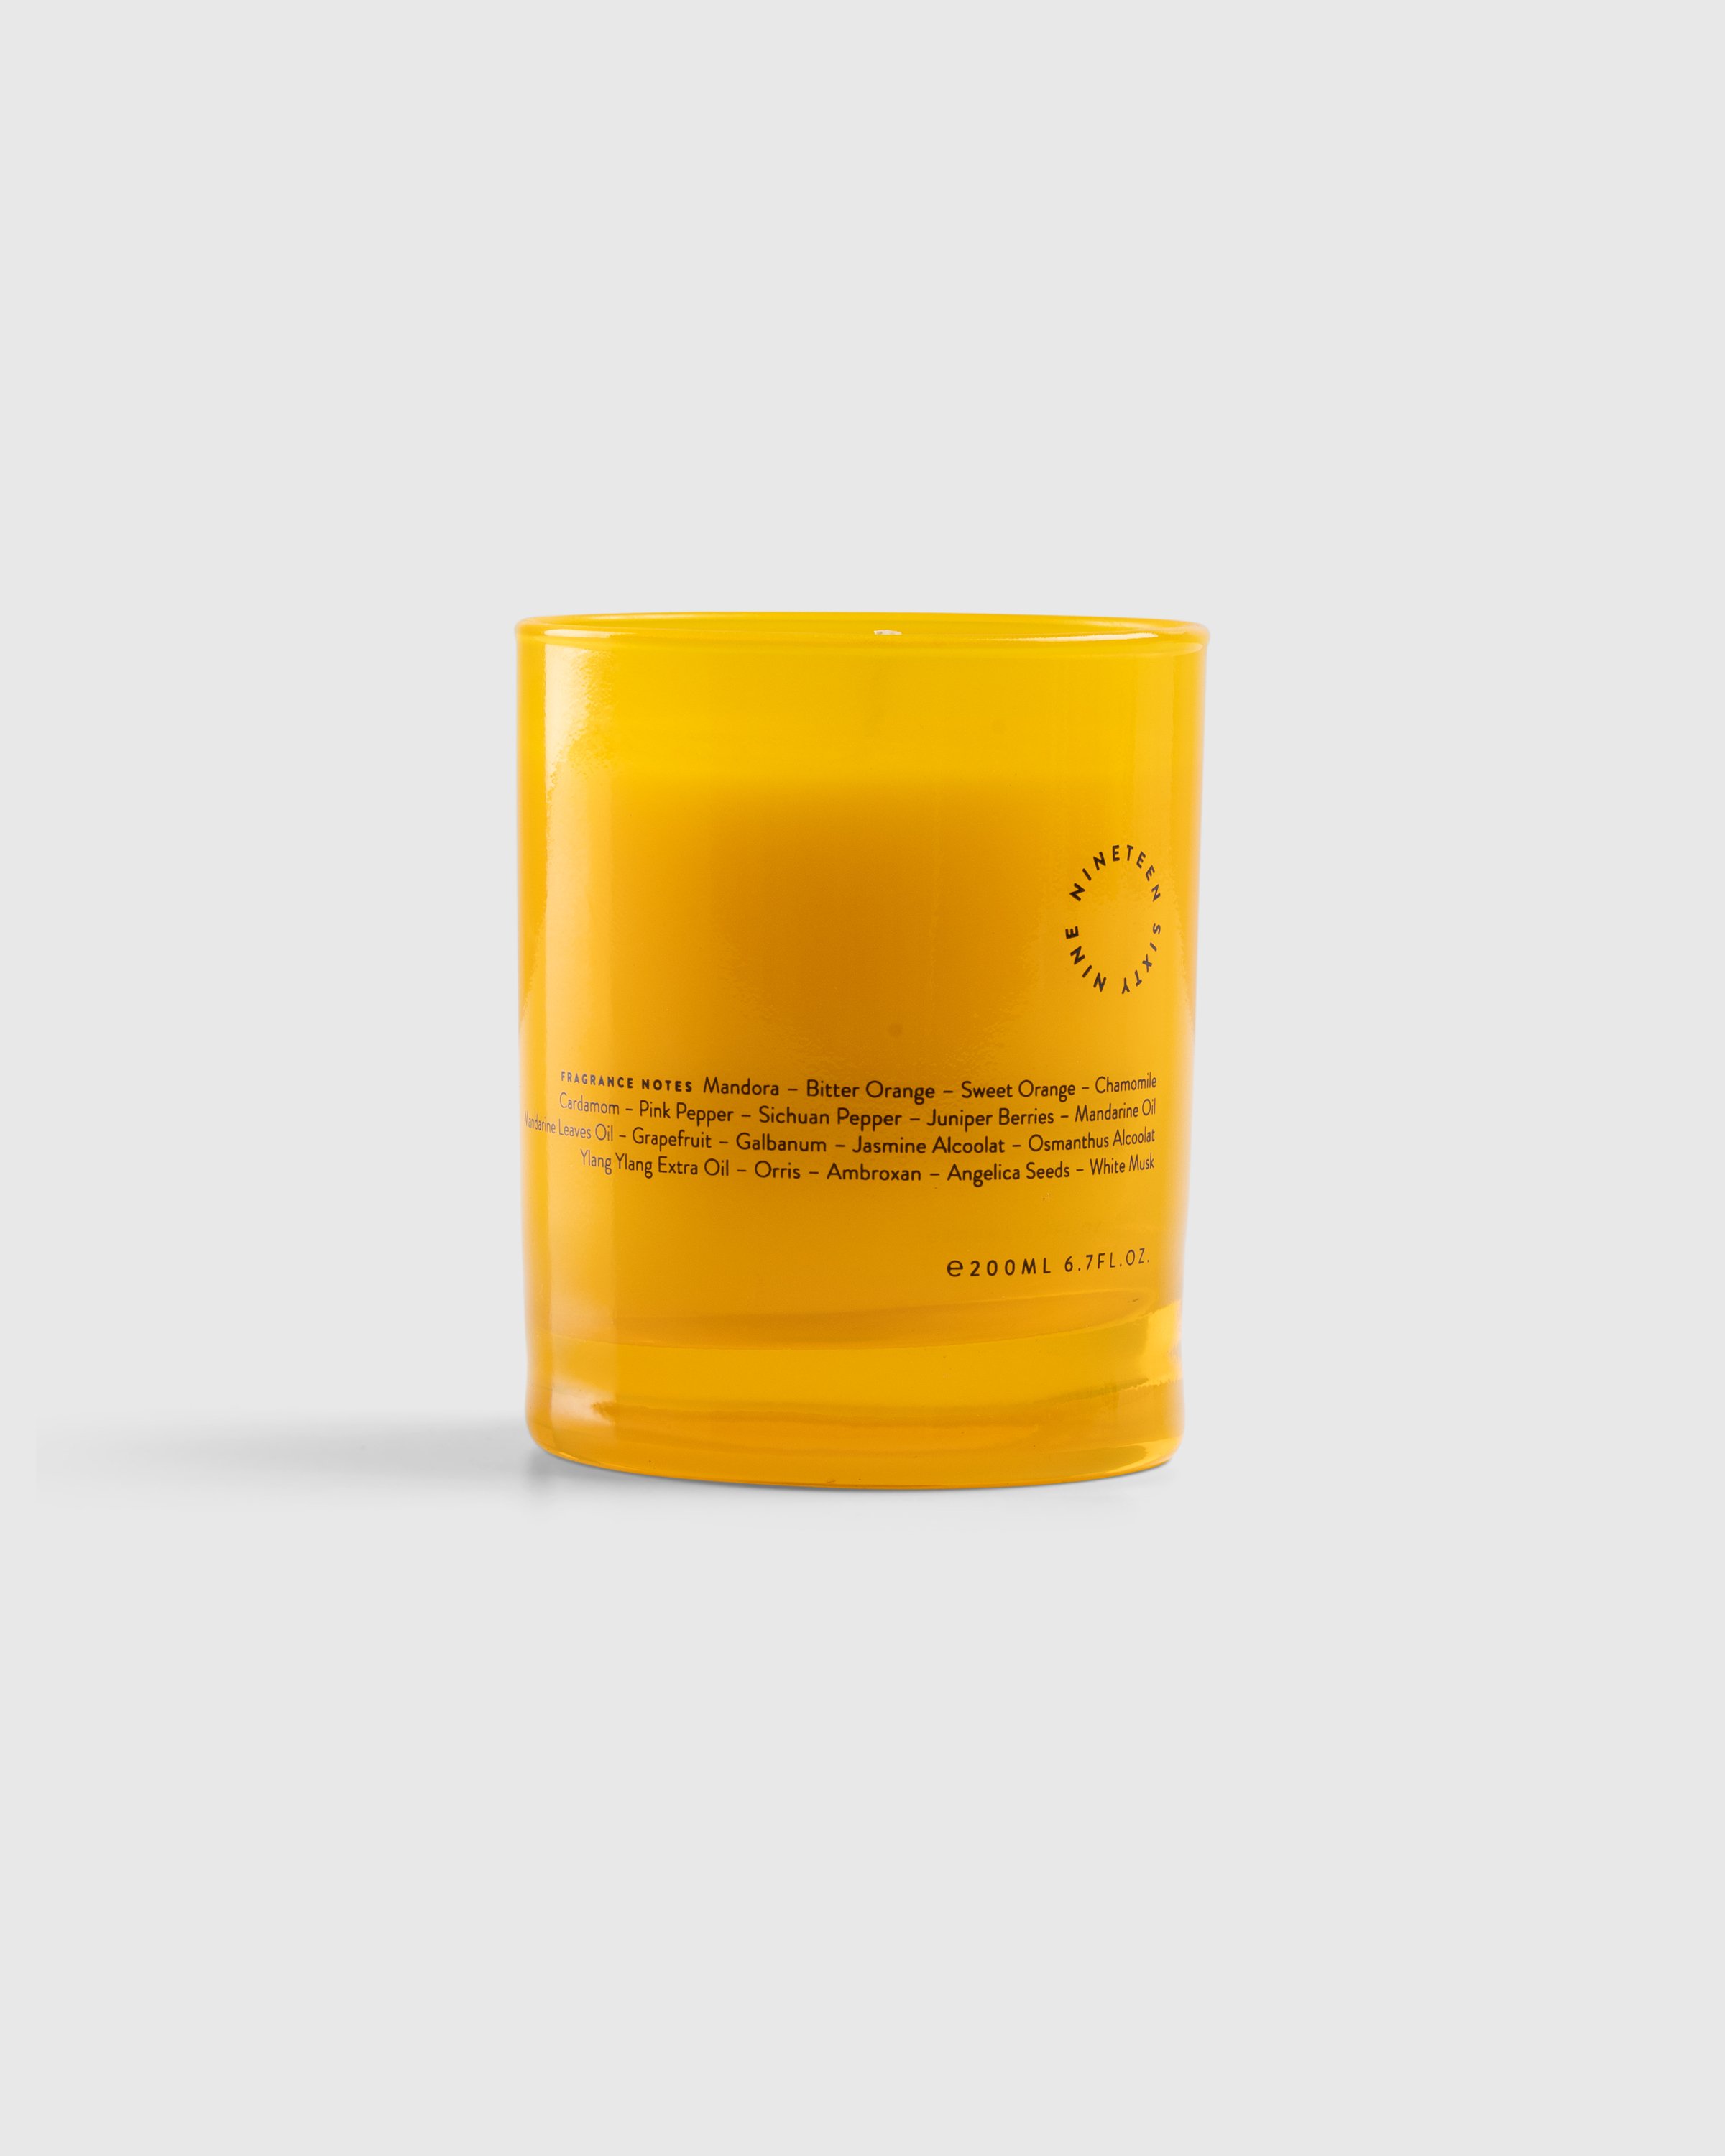 19-69 - Capri BP Candle - Lifestyle - Yellow - Image 2